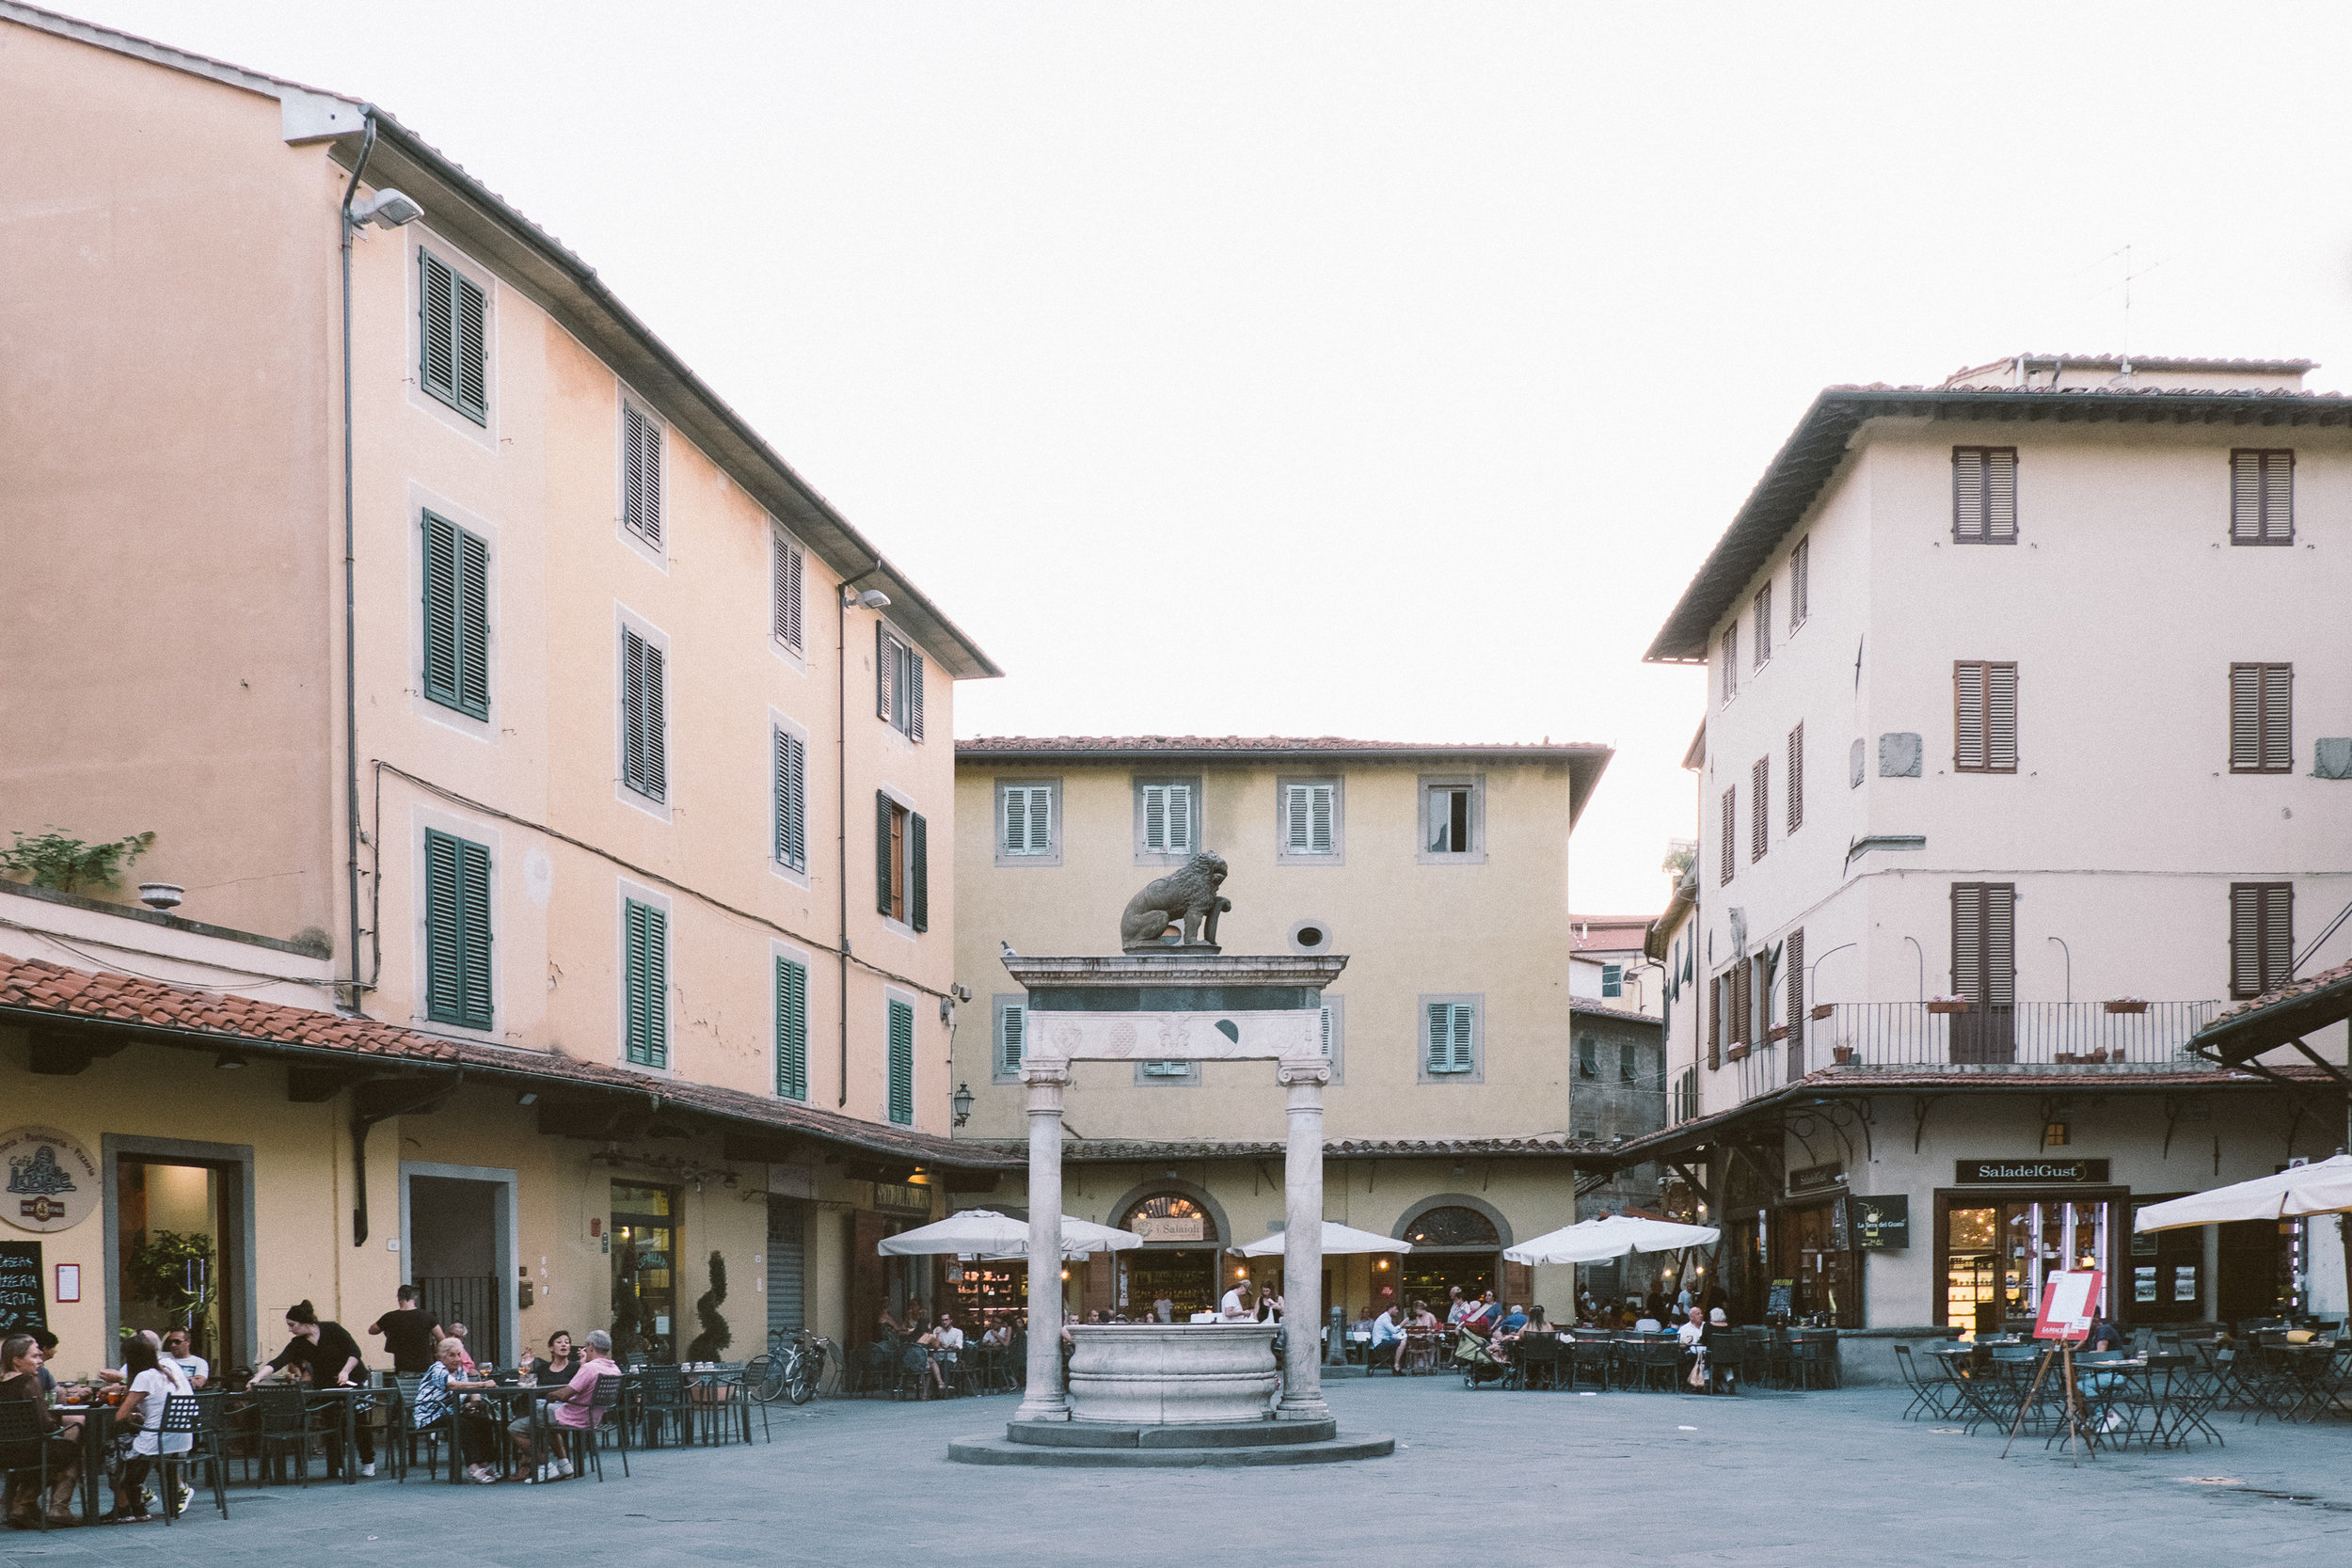 Piazza della Sala has a variety of restaurants and bars 